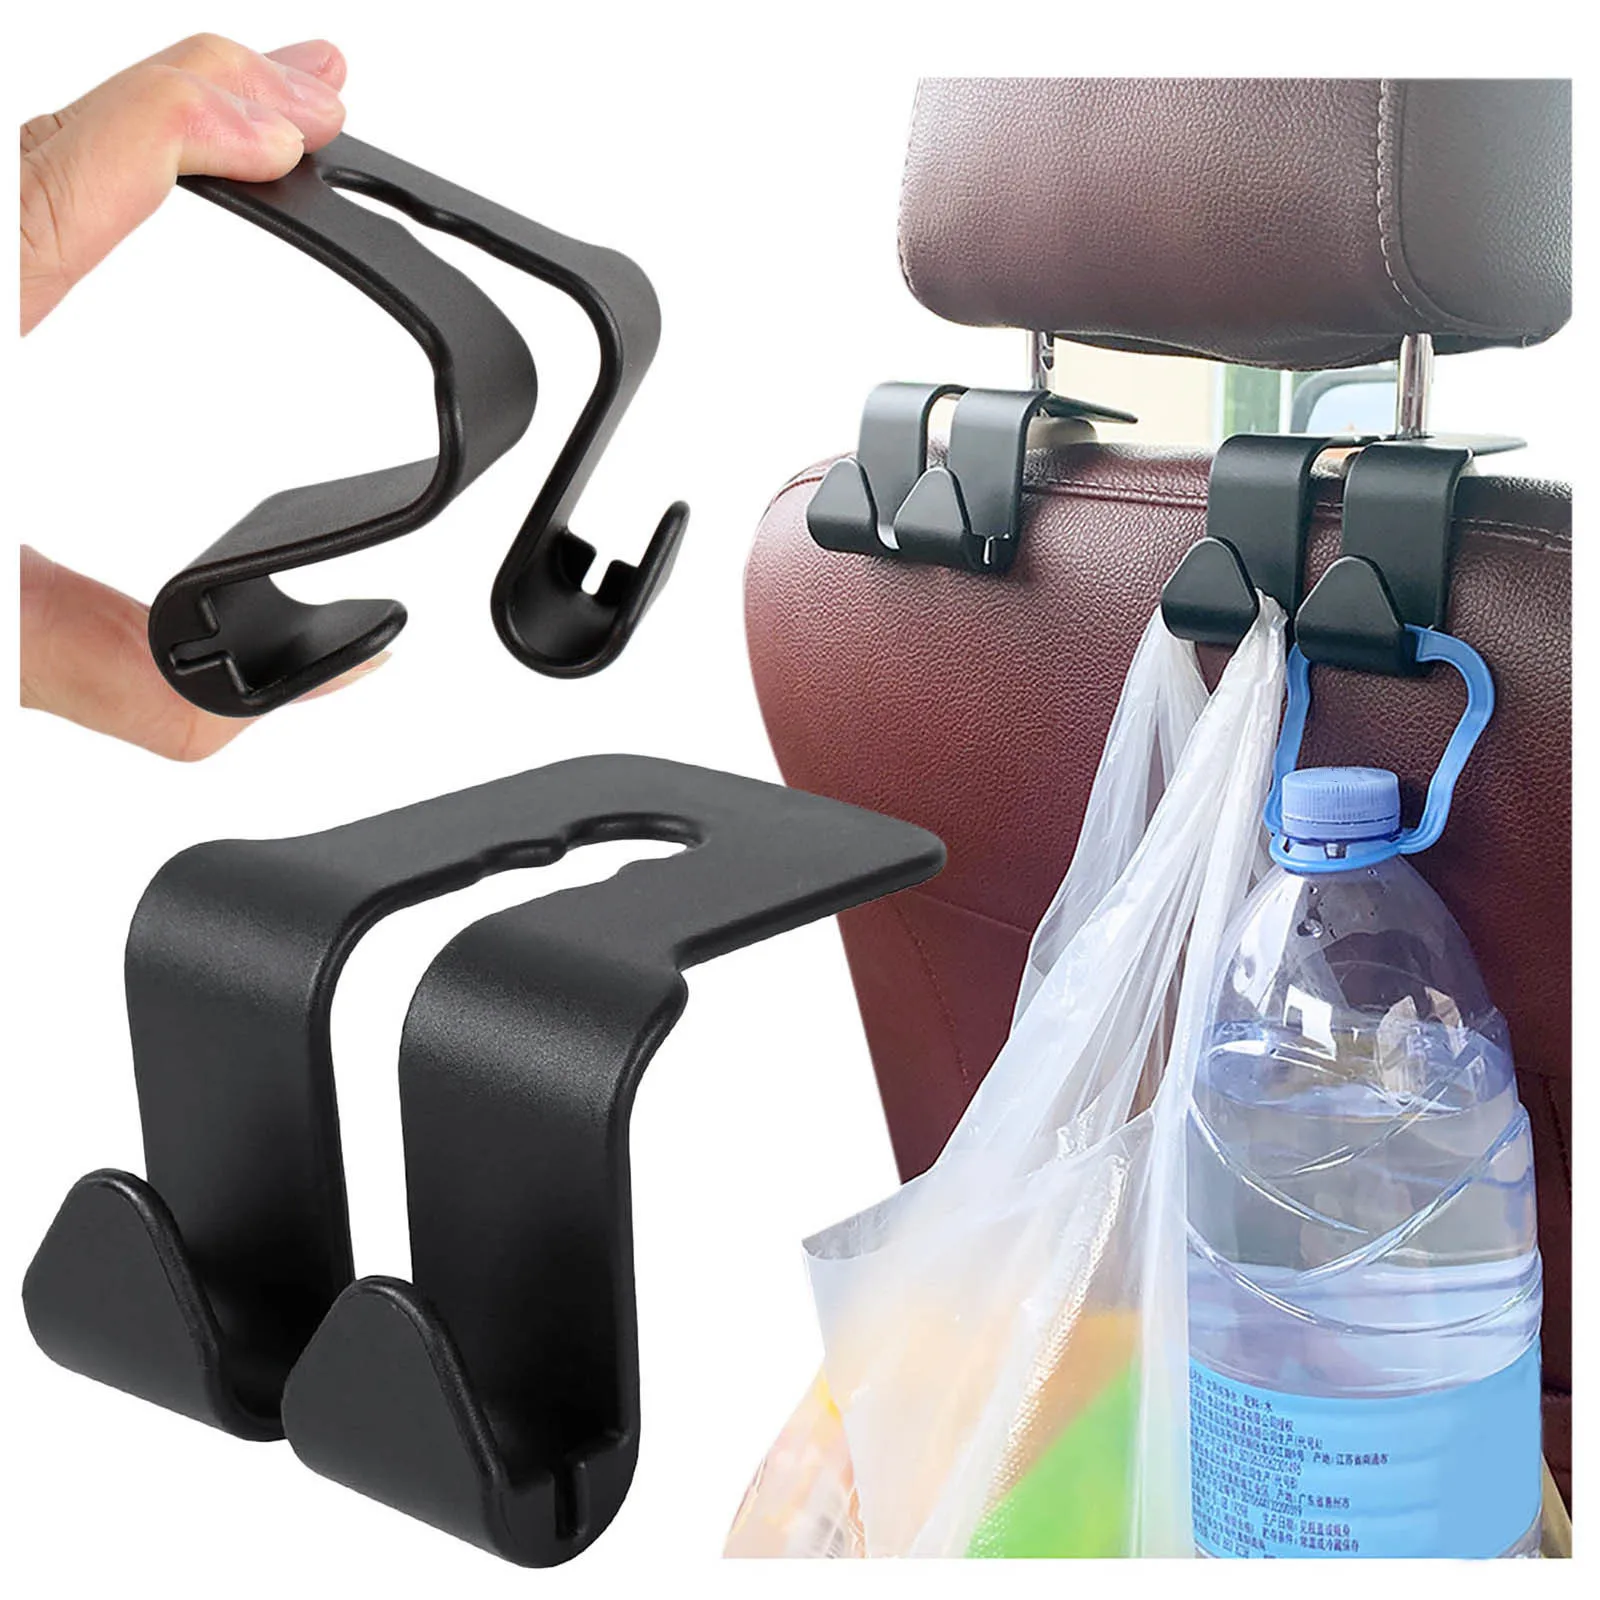 1/2pcs Universal Car Headrest Back Seat Hook Seat Hanger Vehicle Organizer Holder for Handbags Purses Coats and Grocery Bag L*5